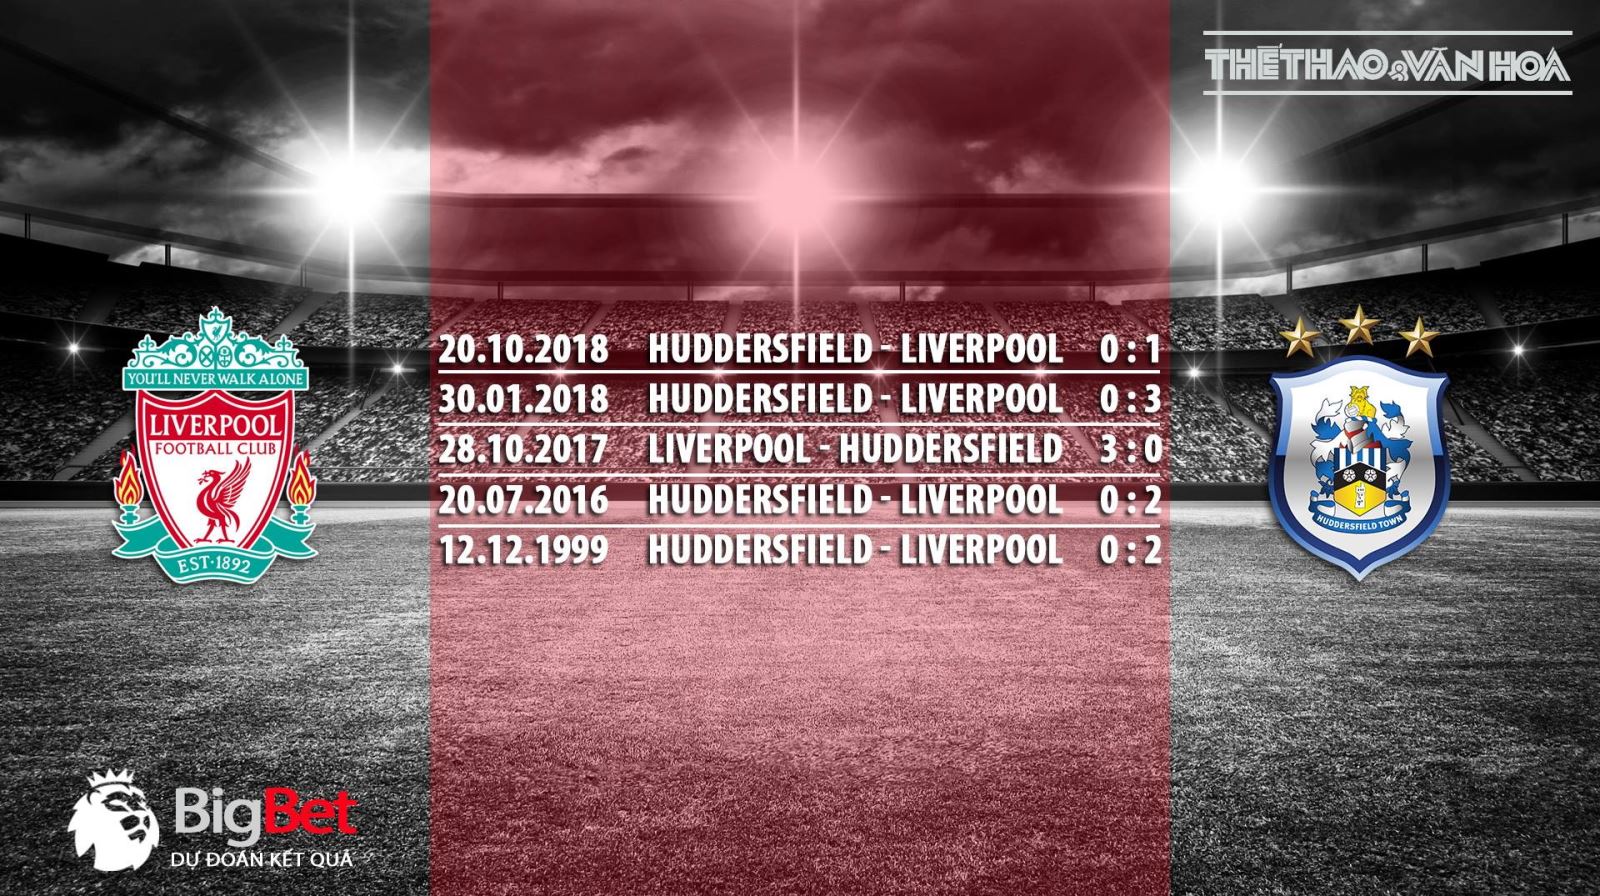 Liverpool vs Huddersfield, trực tiếp bóng đá, Liverpool, Huddersfield, link xem trực tiếp Liverpool vs Huddersfield, nhận định bóng đá Liverpool vs Huddersfield